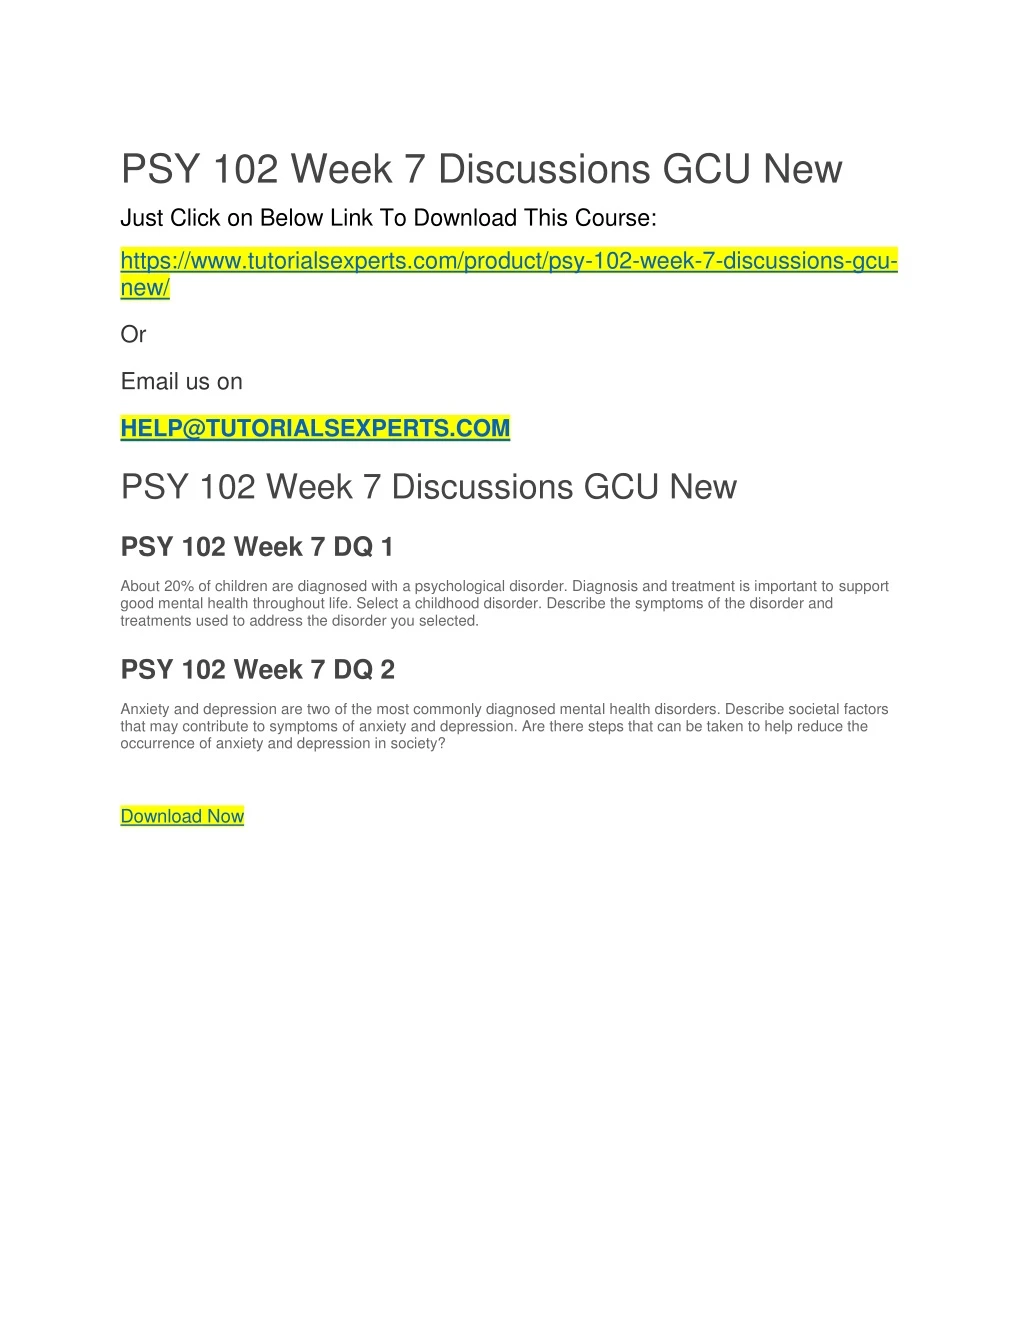 psy 102 week 7 discussions gcu new just click